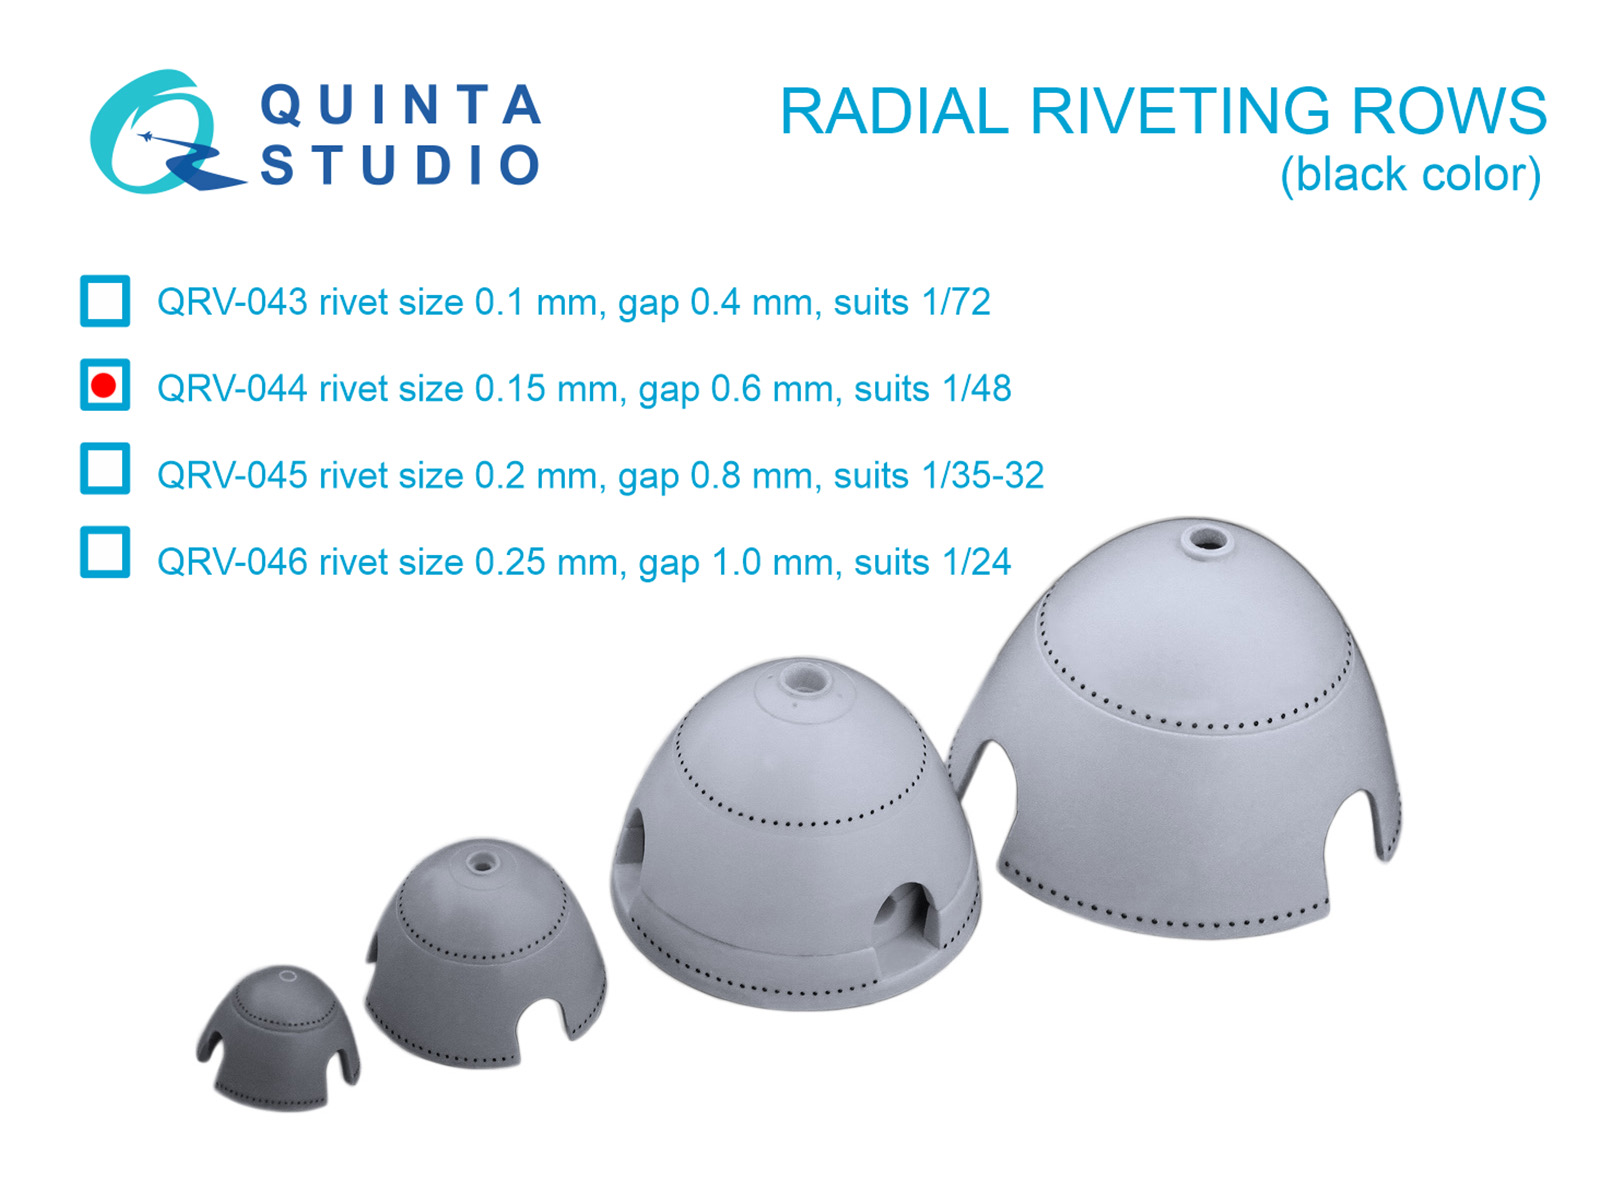 Radial riveting rows (rivet size 0.15 mm, gap 0.6 mm, suits 1/48), Black color